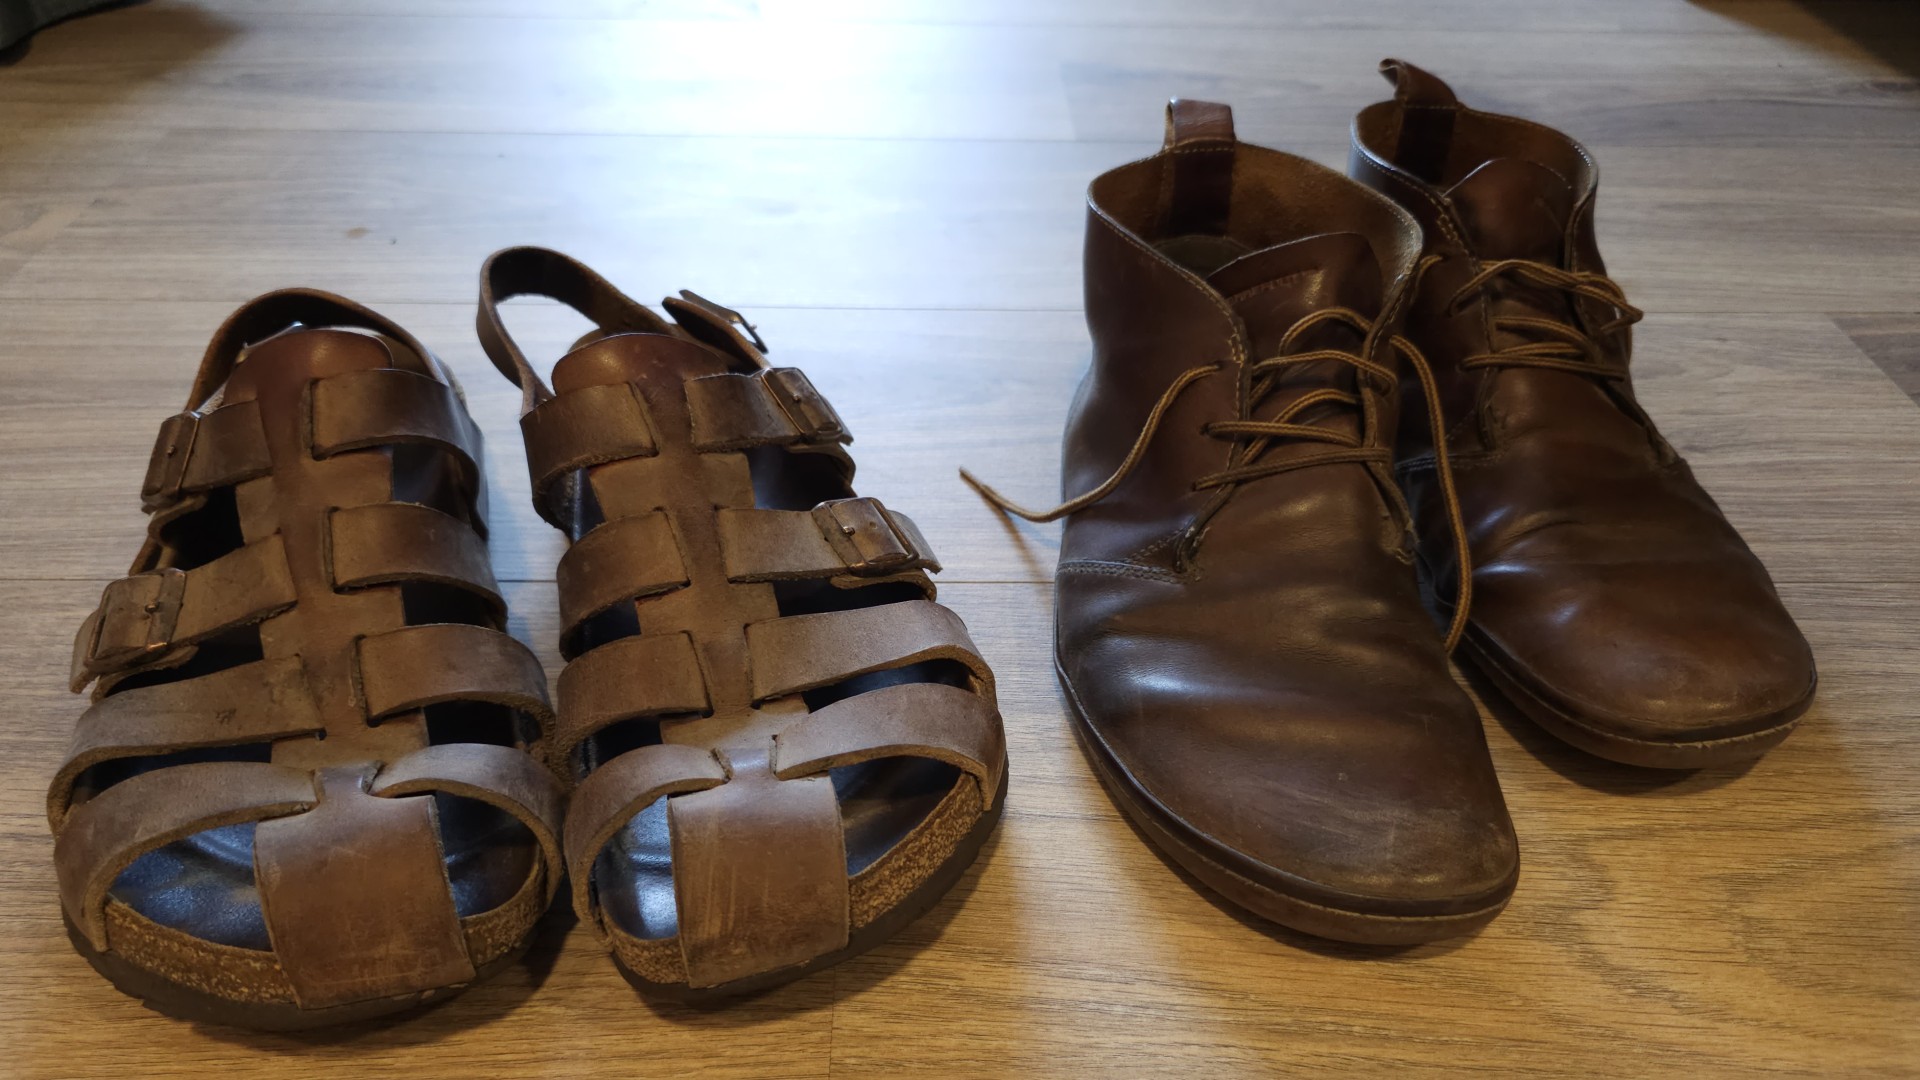 Sandals vs barefoot shoes